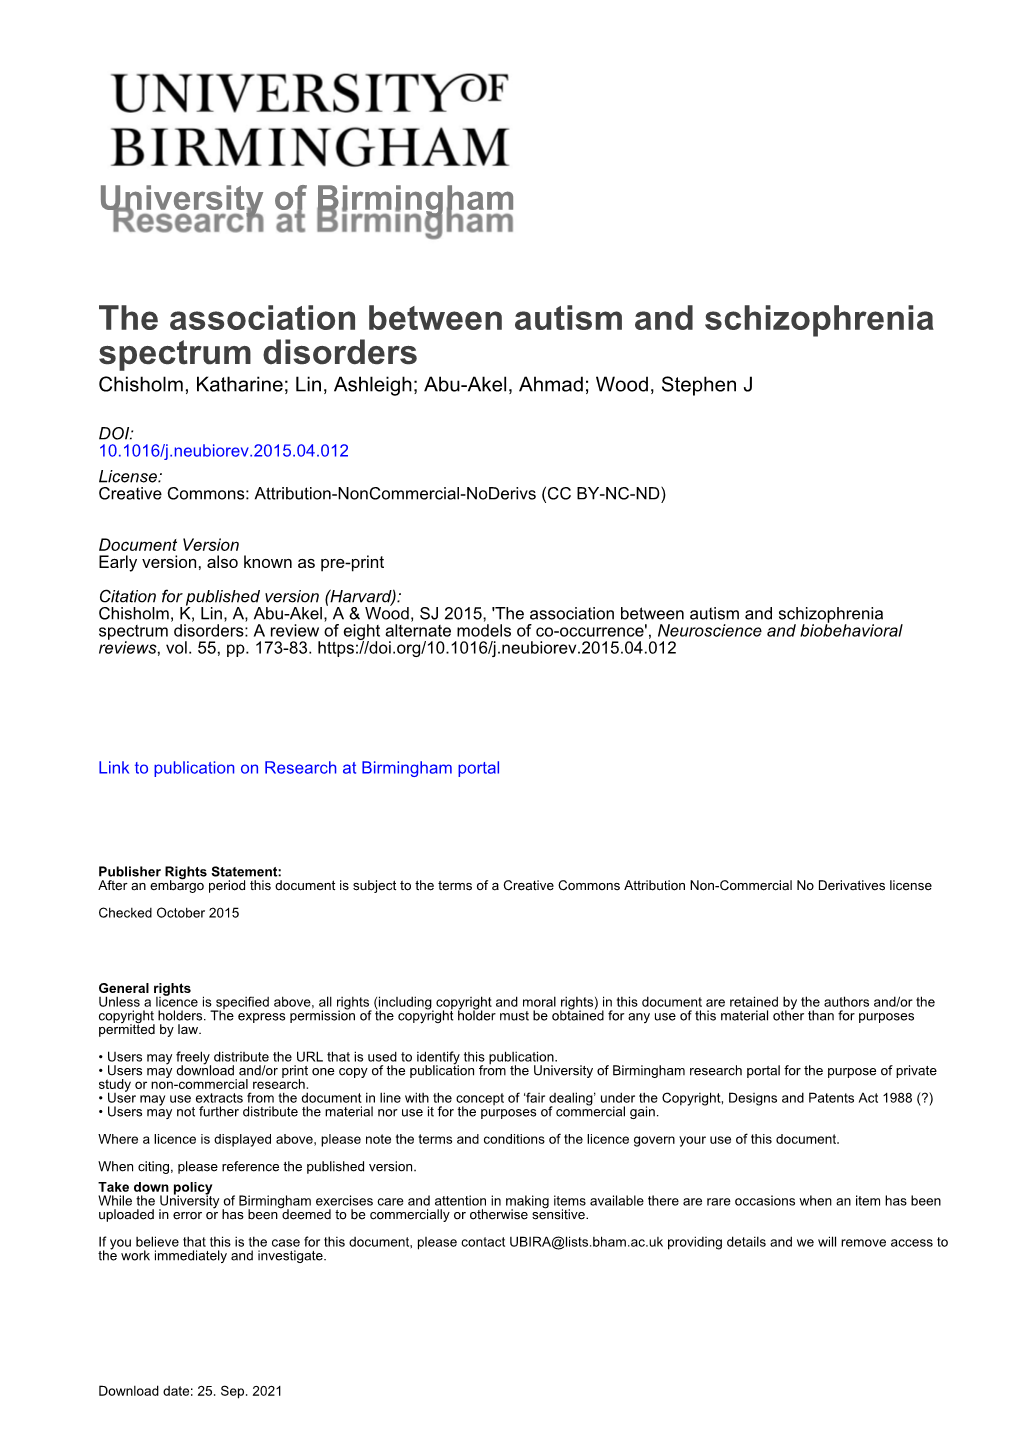 University of Birmingham the Association Between Autism And